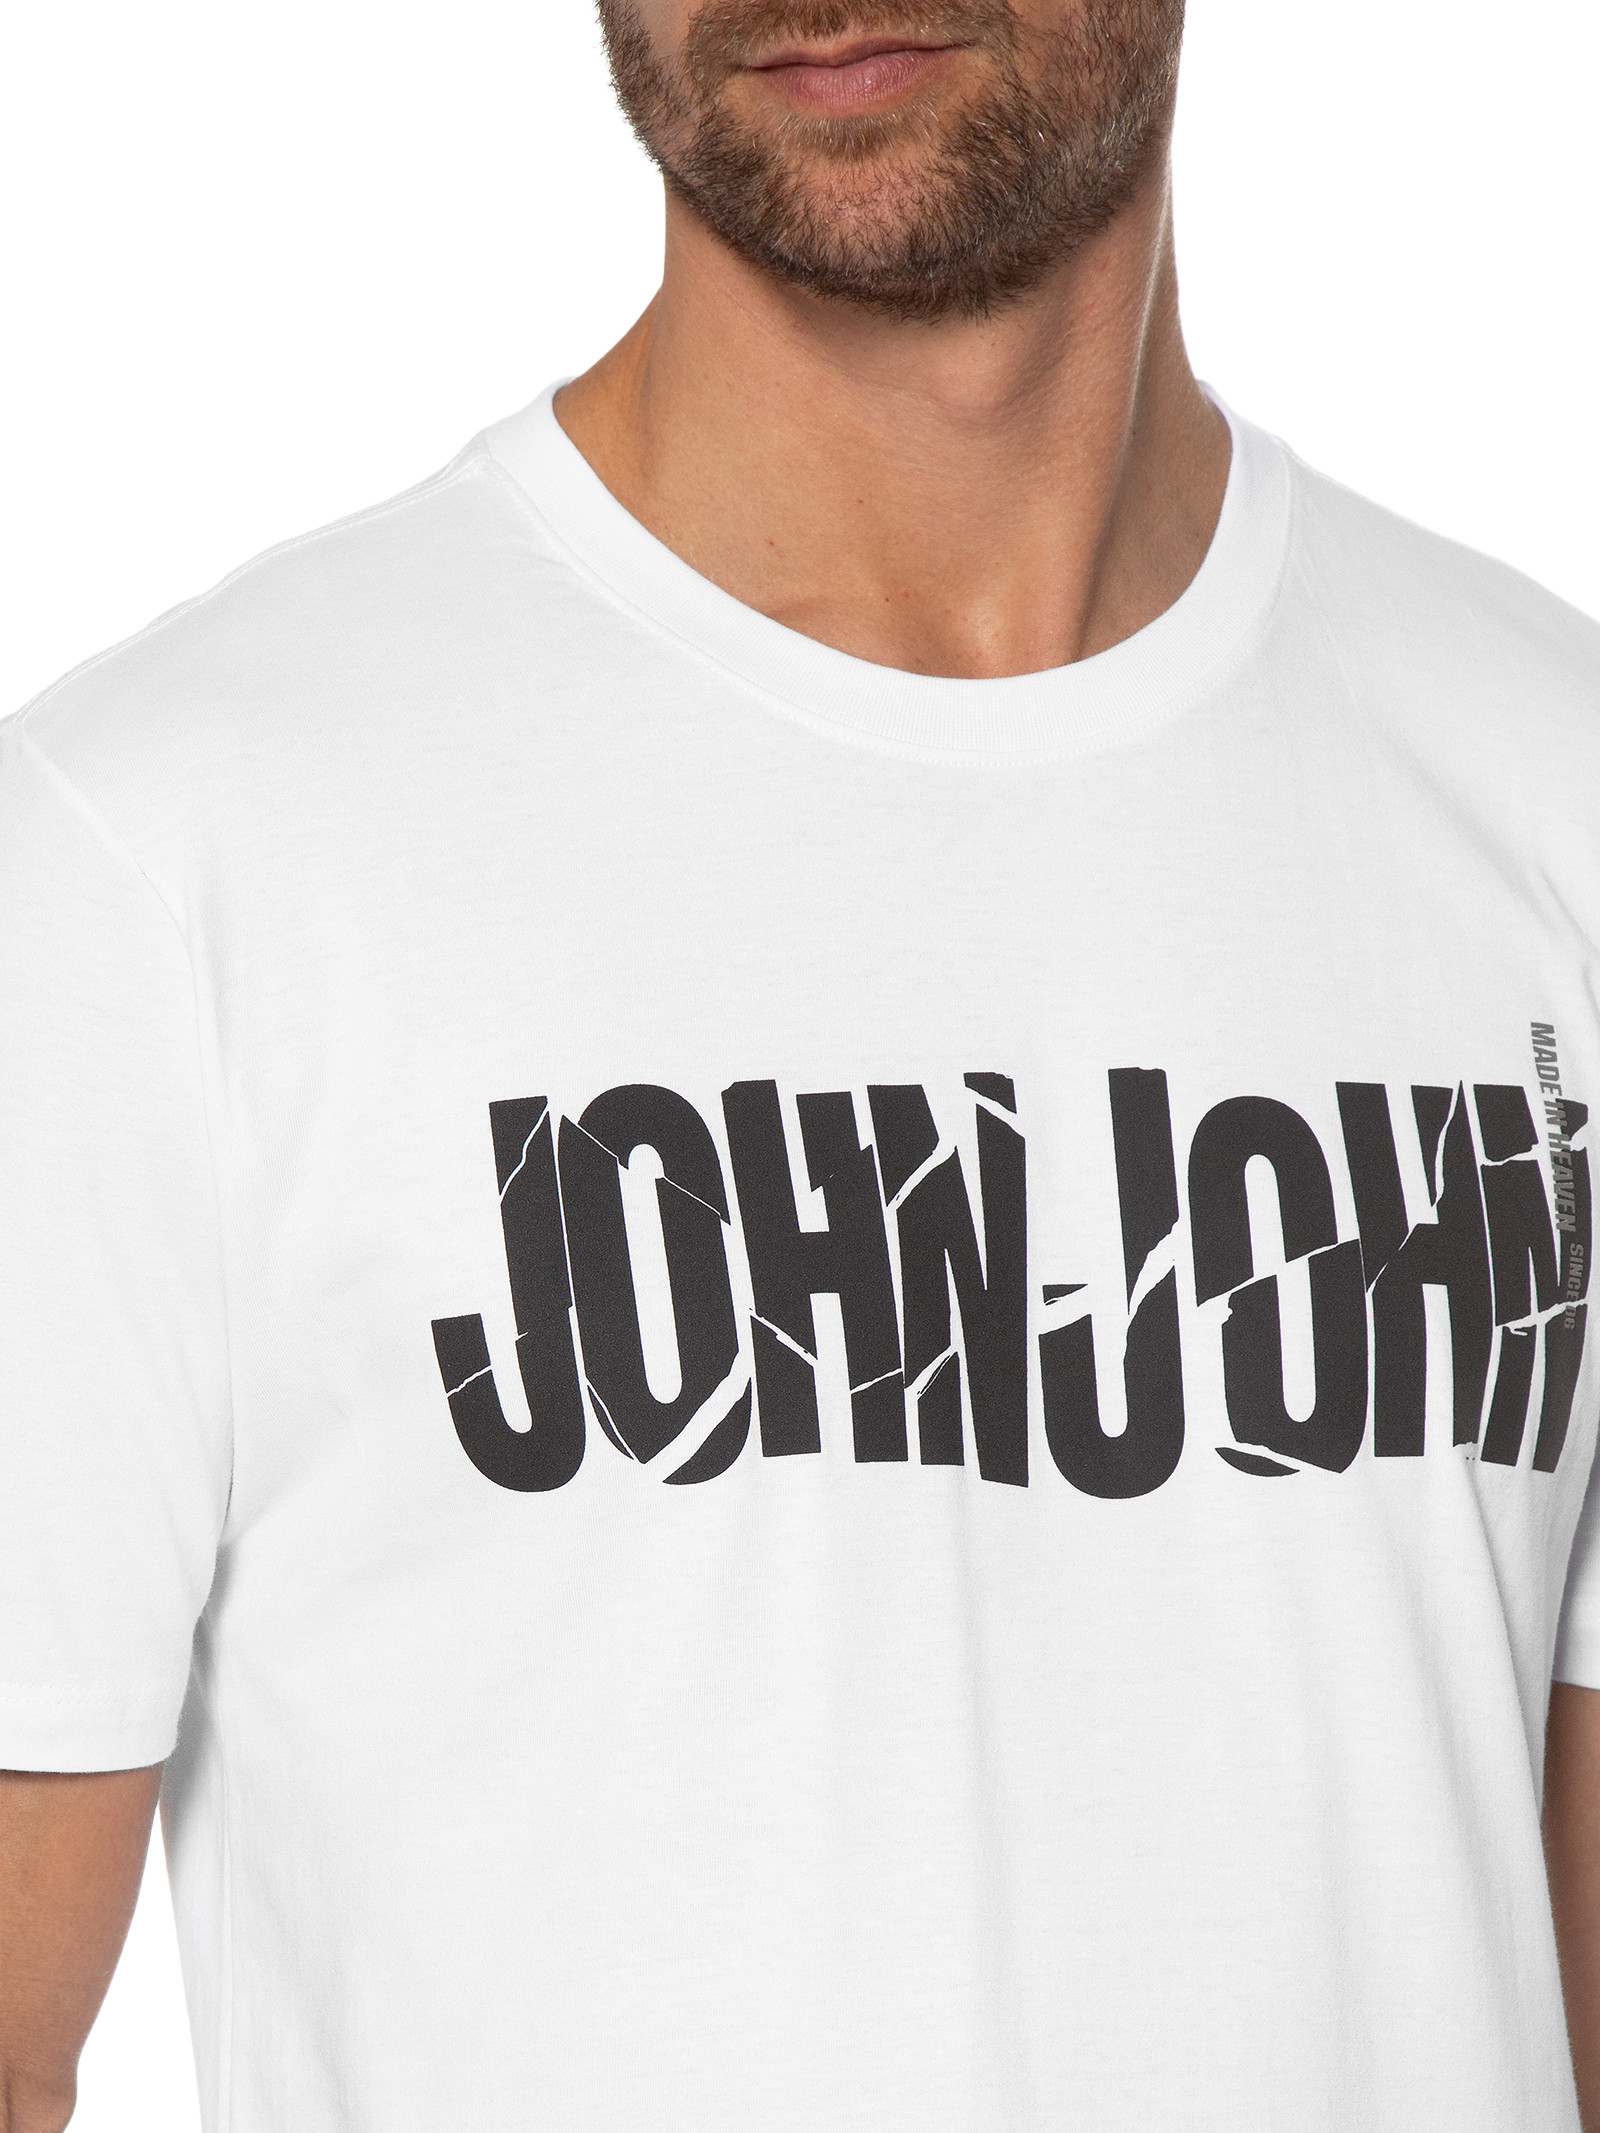 Camiseta John John Masculina Regular Washed Heaven Inc Preta 